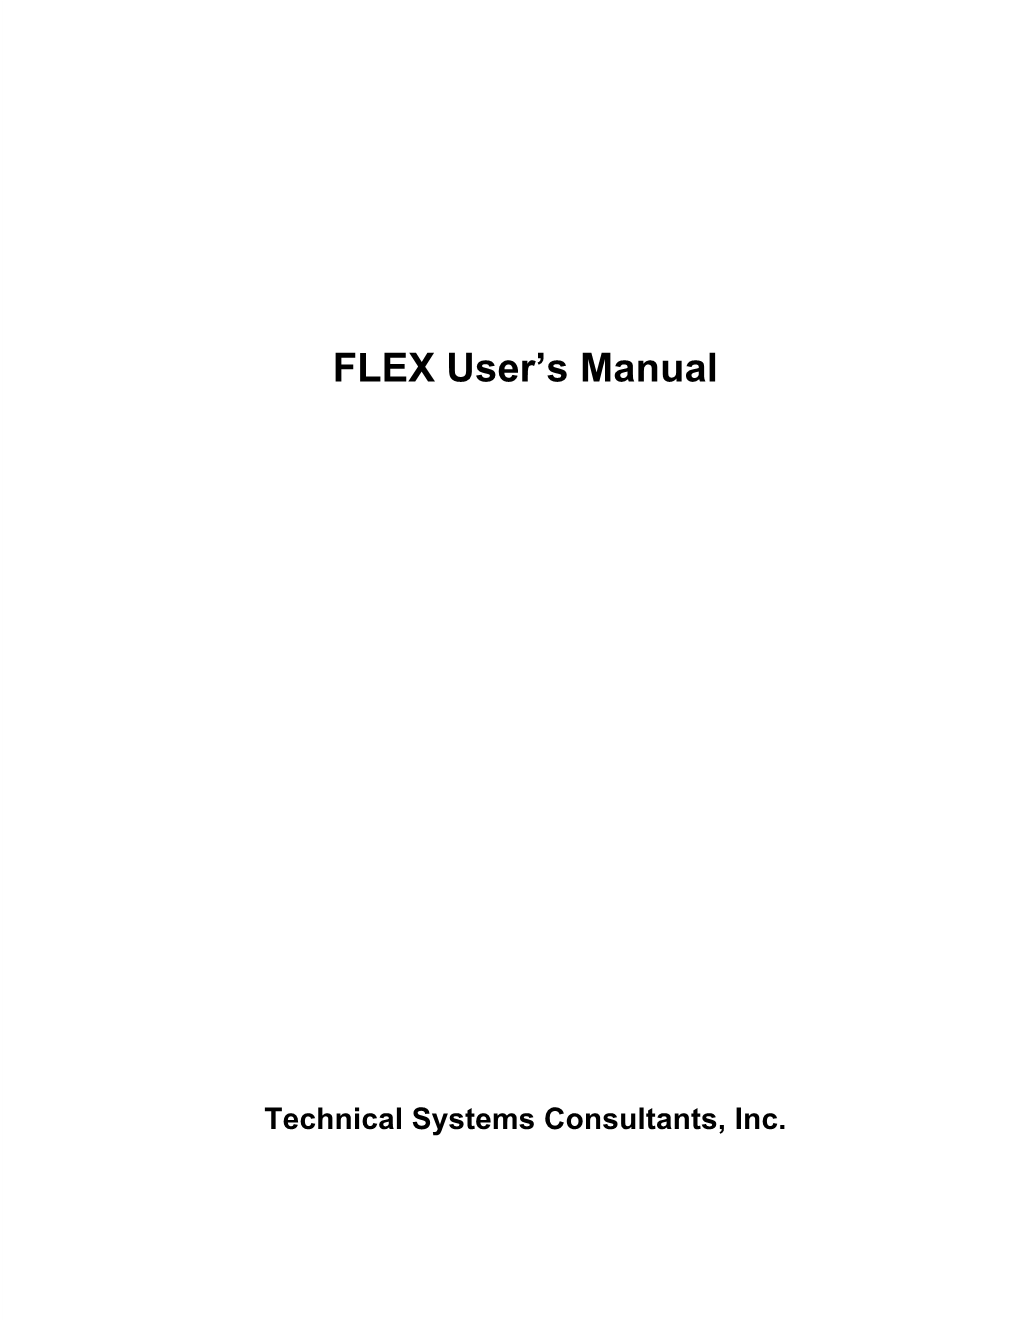 FLEX User's Manual